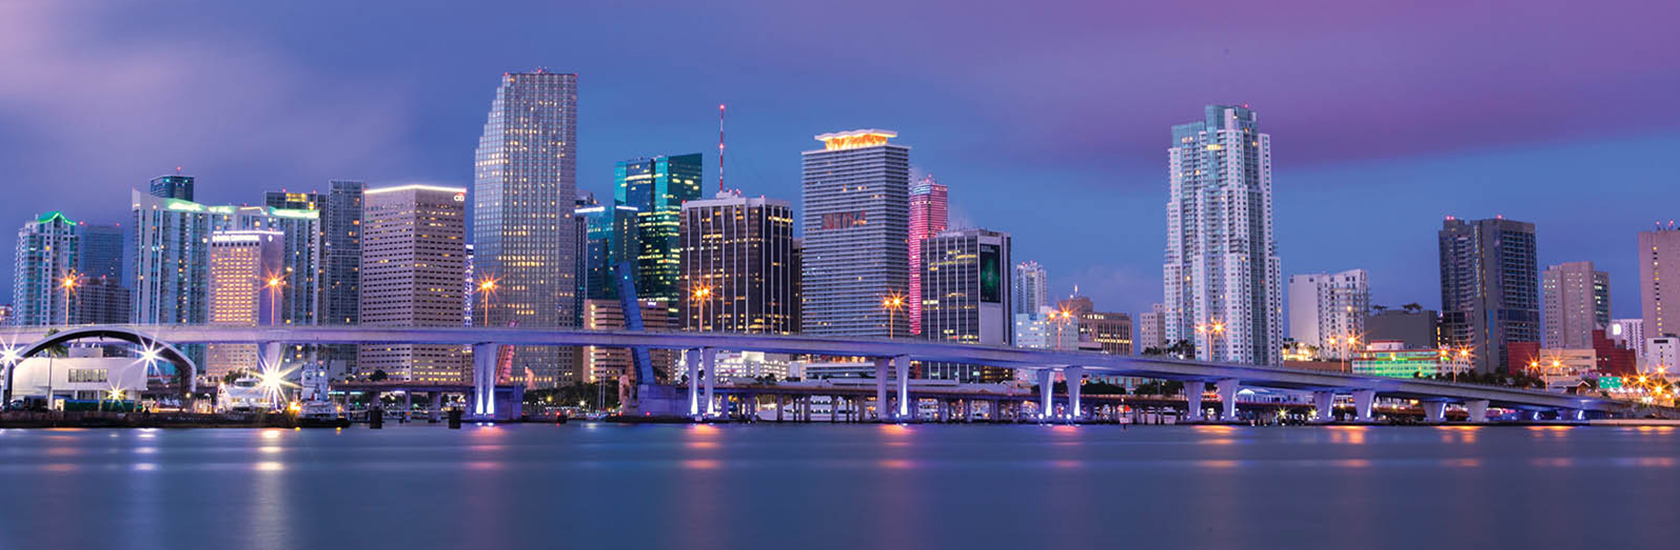 image of Miami